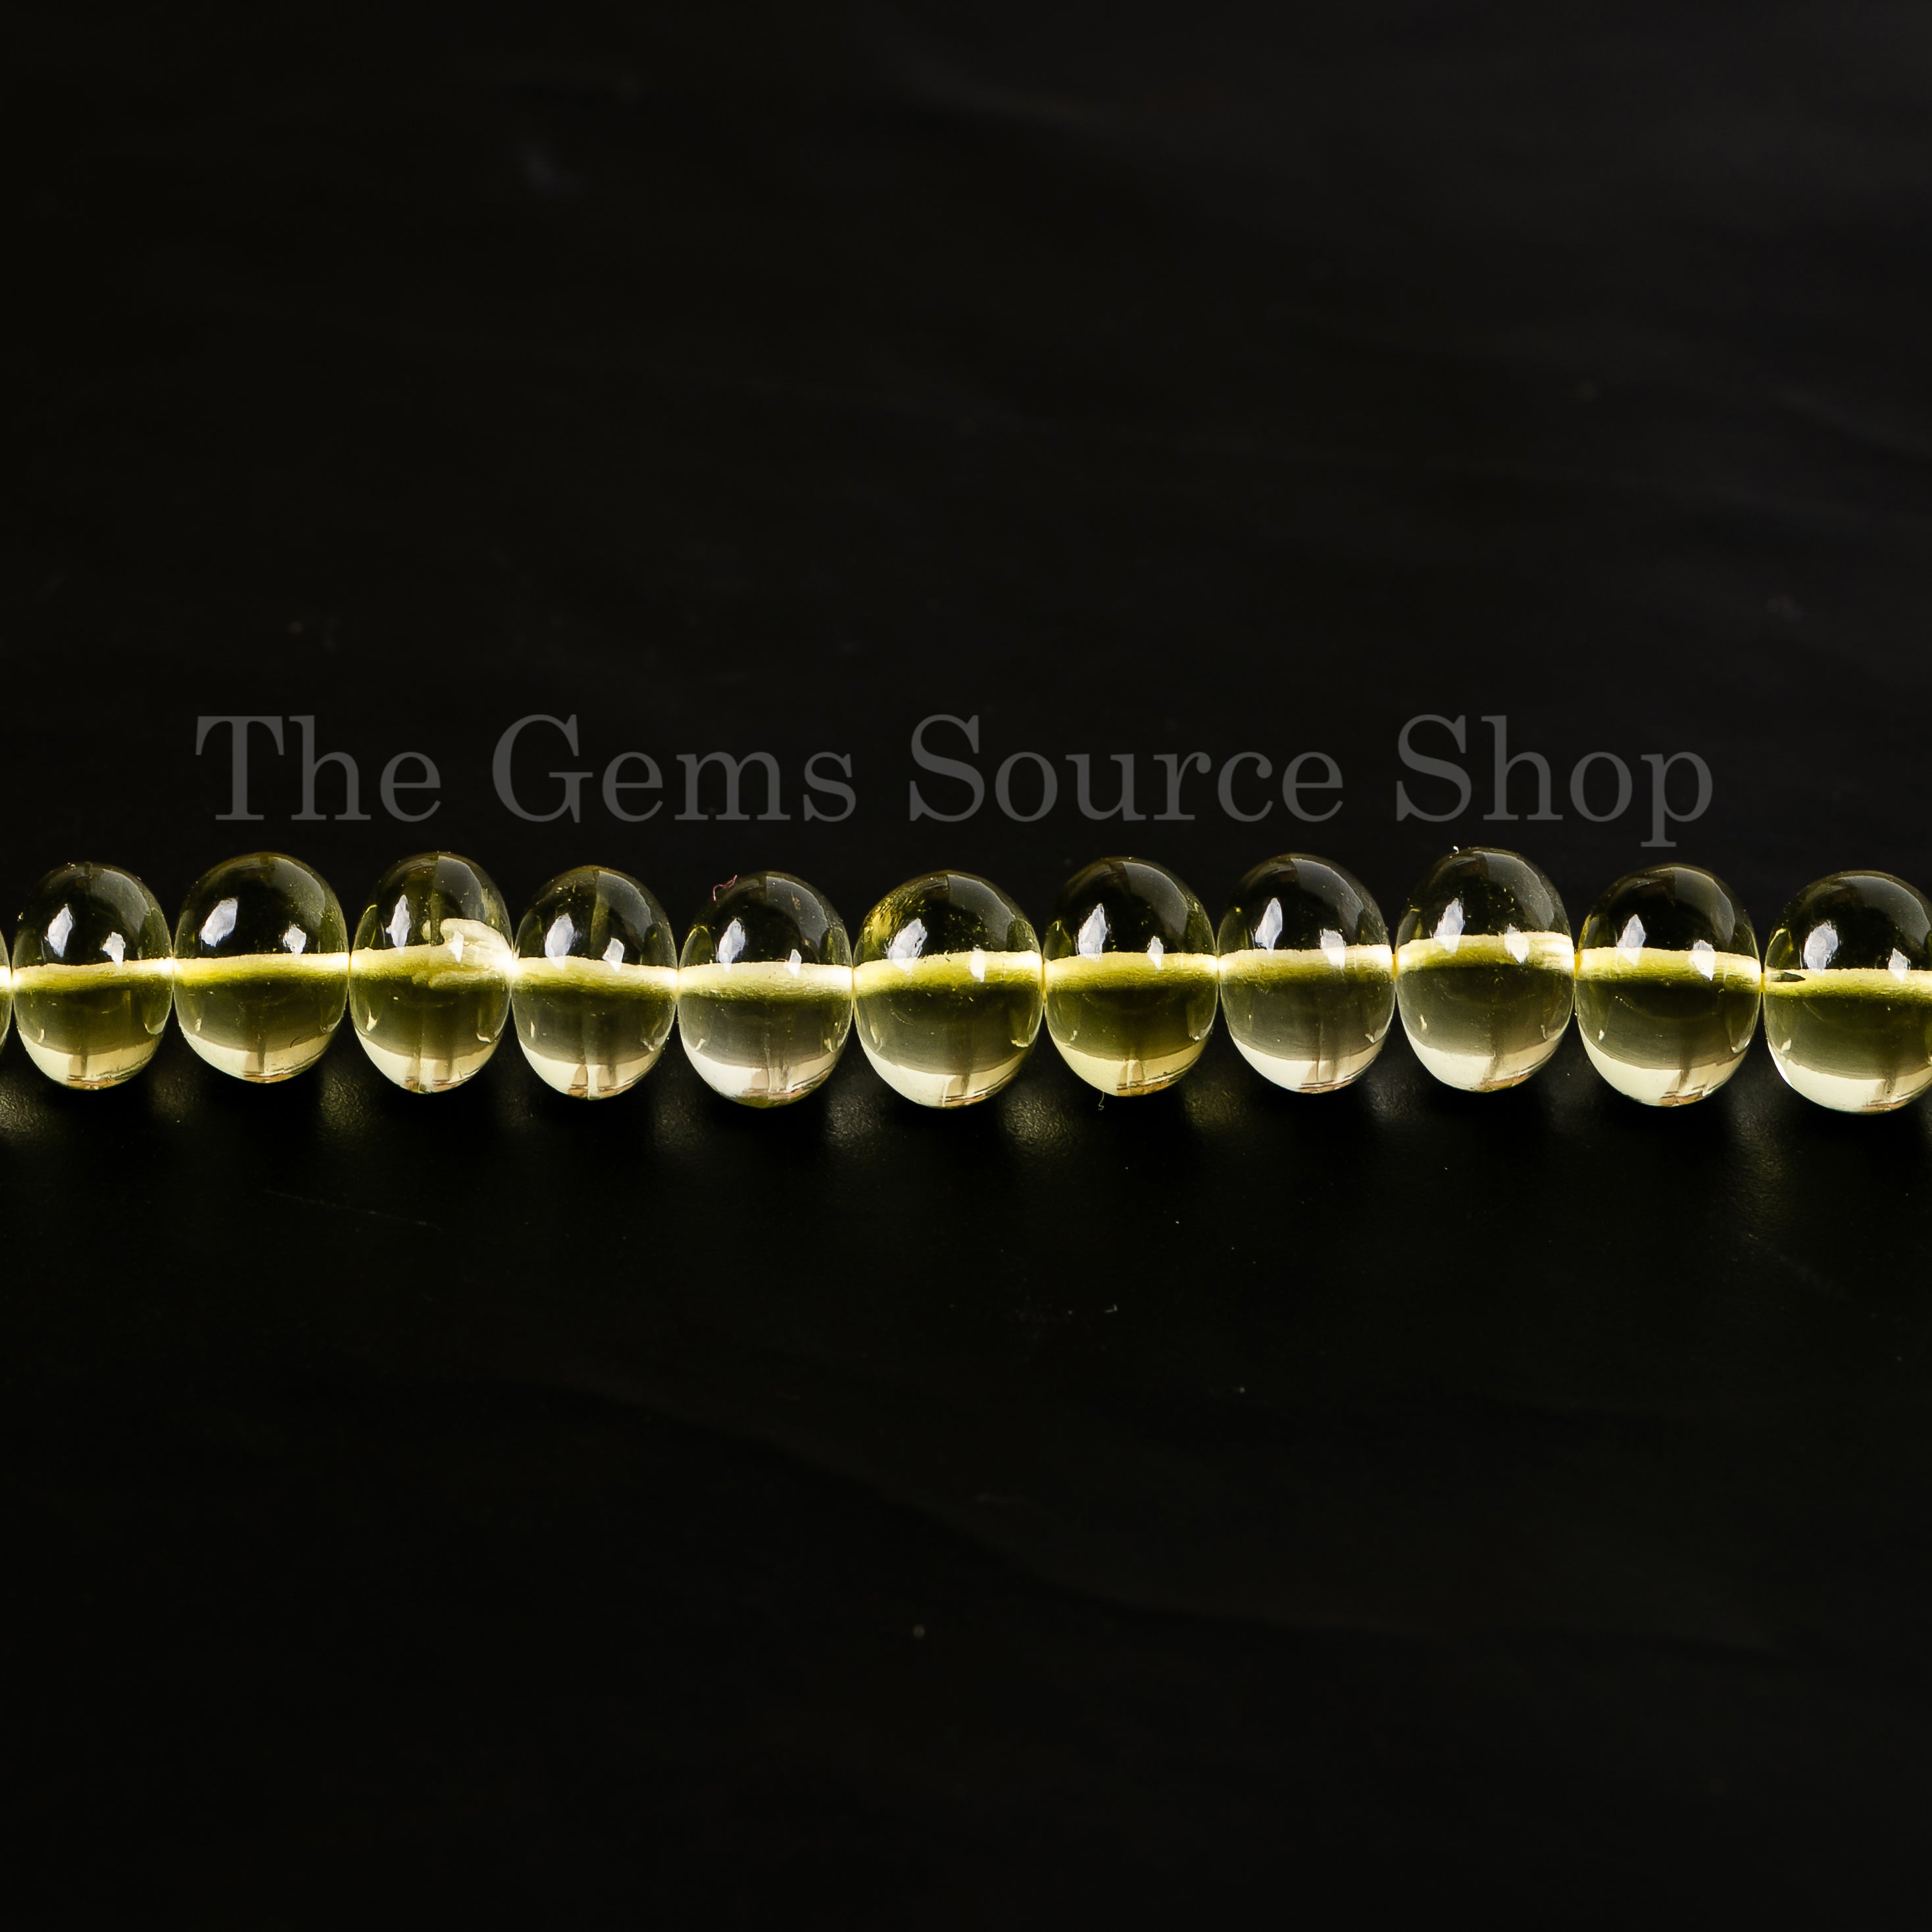 Lemon Quartz Smooth Rondelle Shape Beads TGS-4950